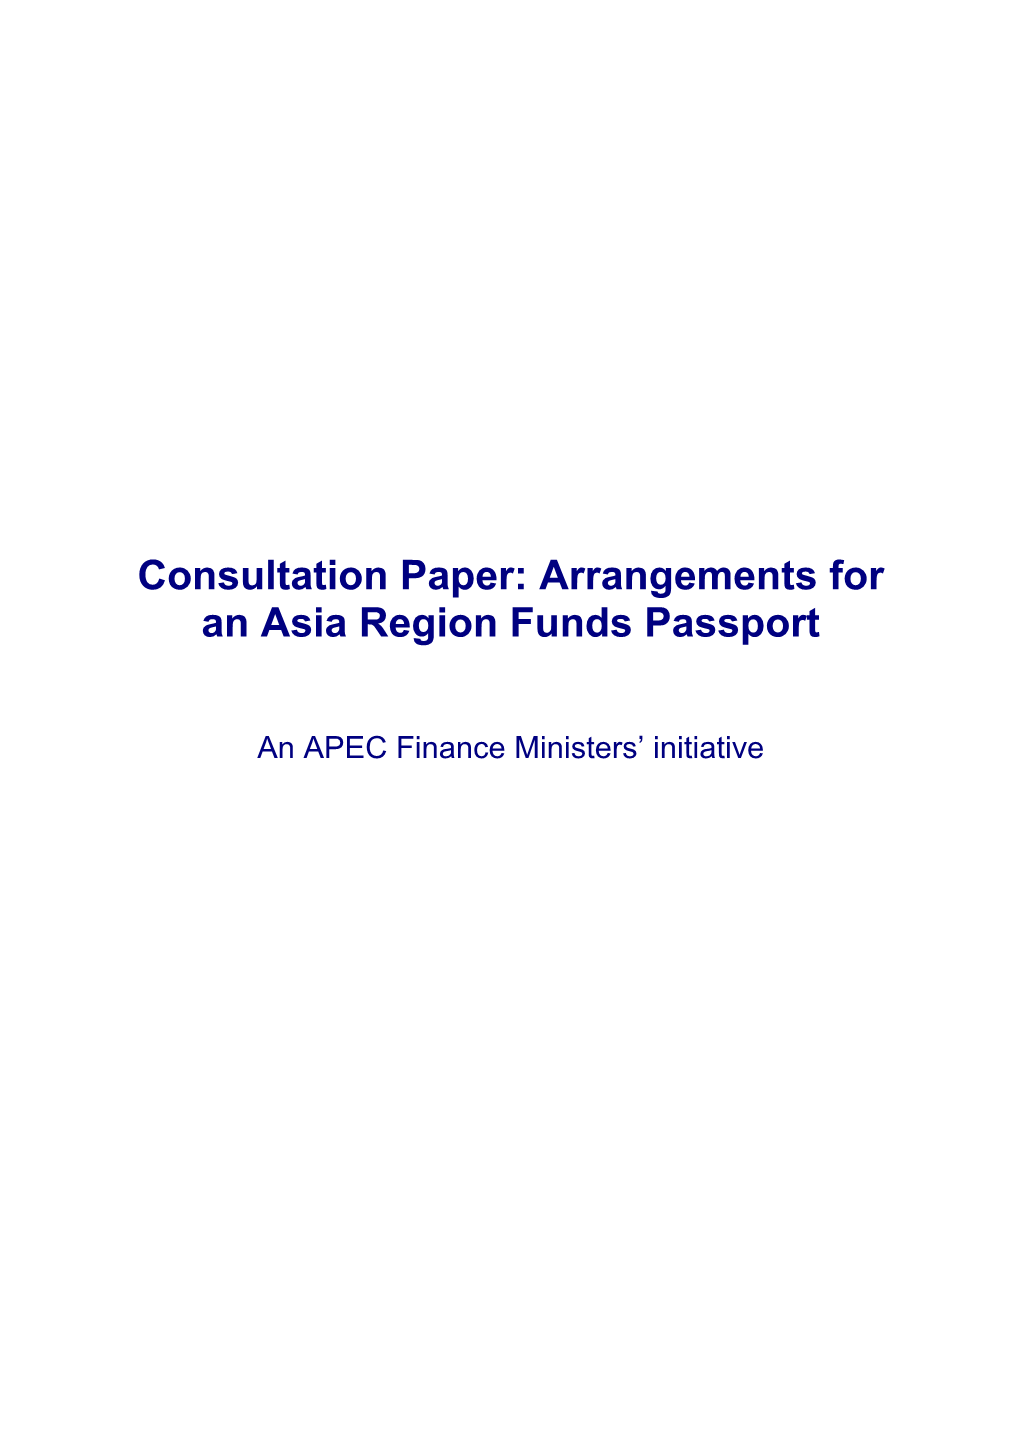 Consultation Paper: Arrangements for an Asia Region Funds Passport